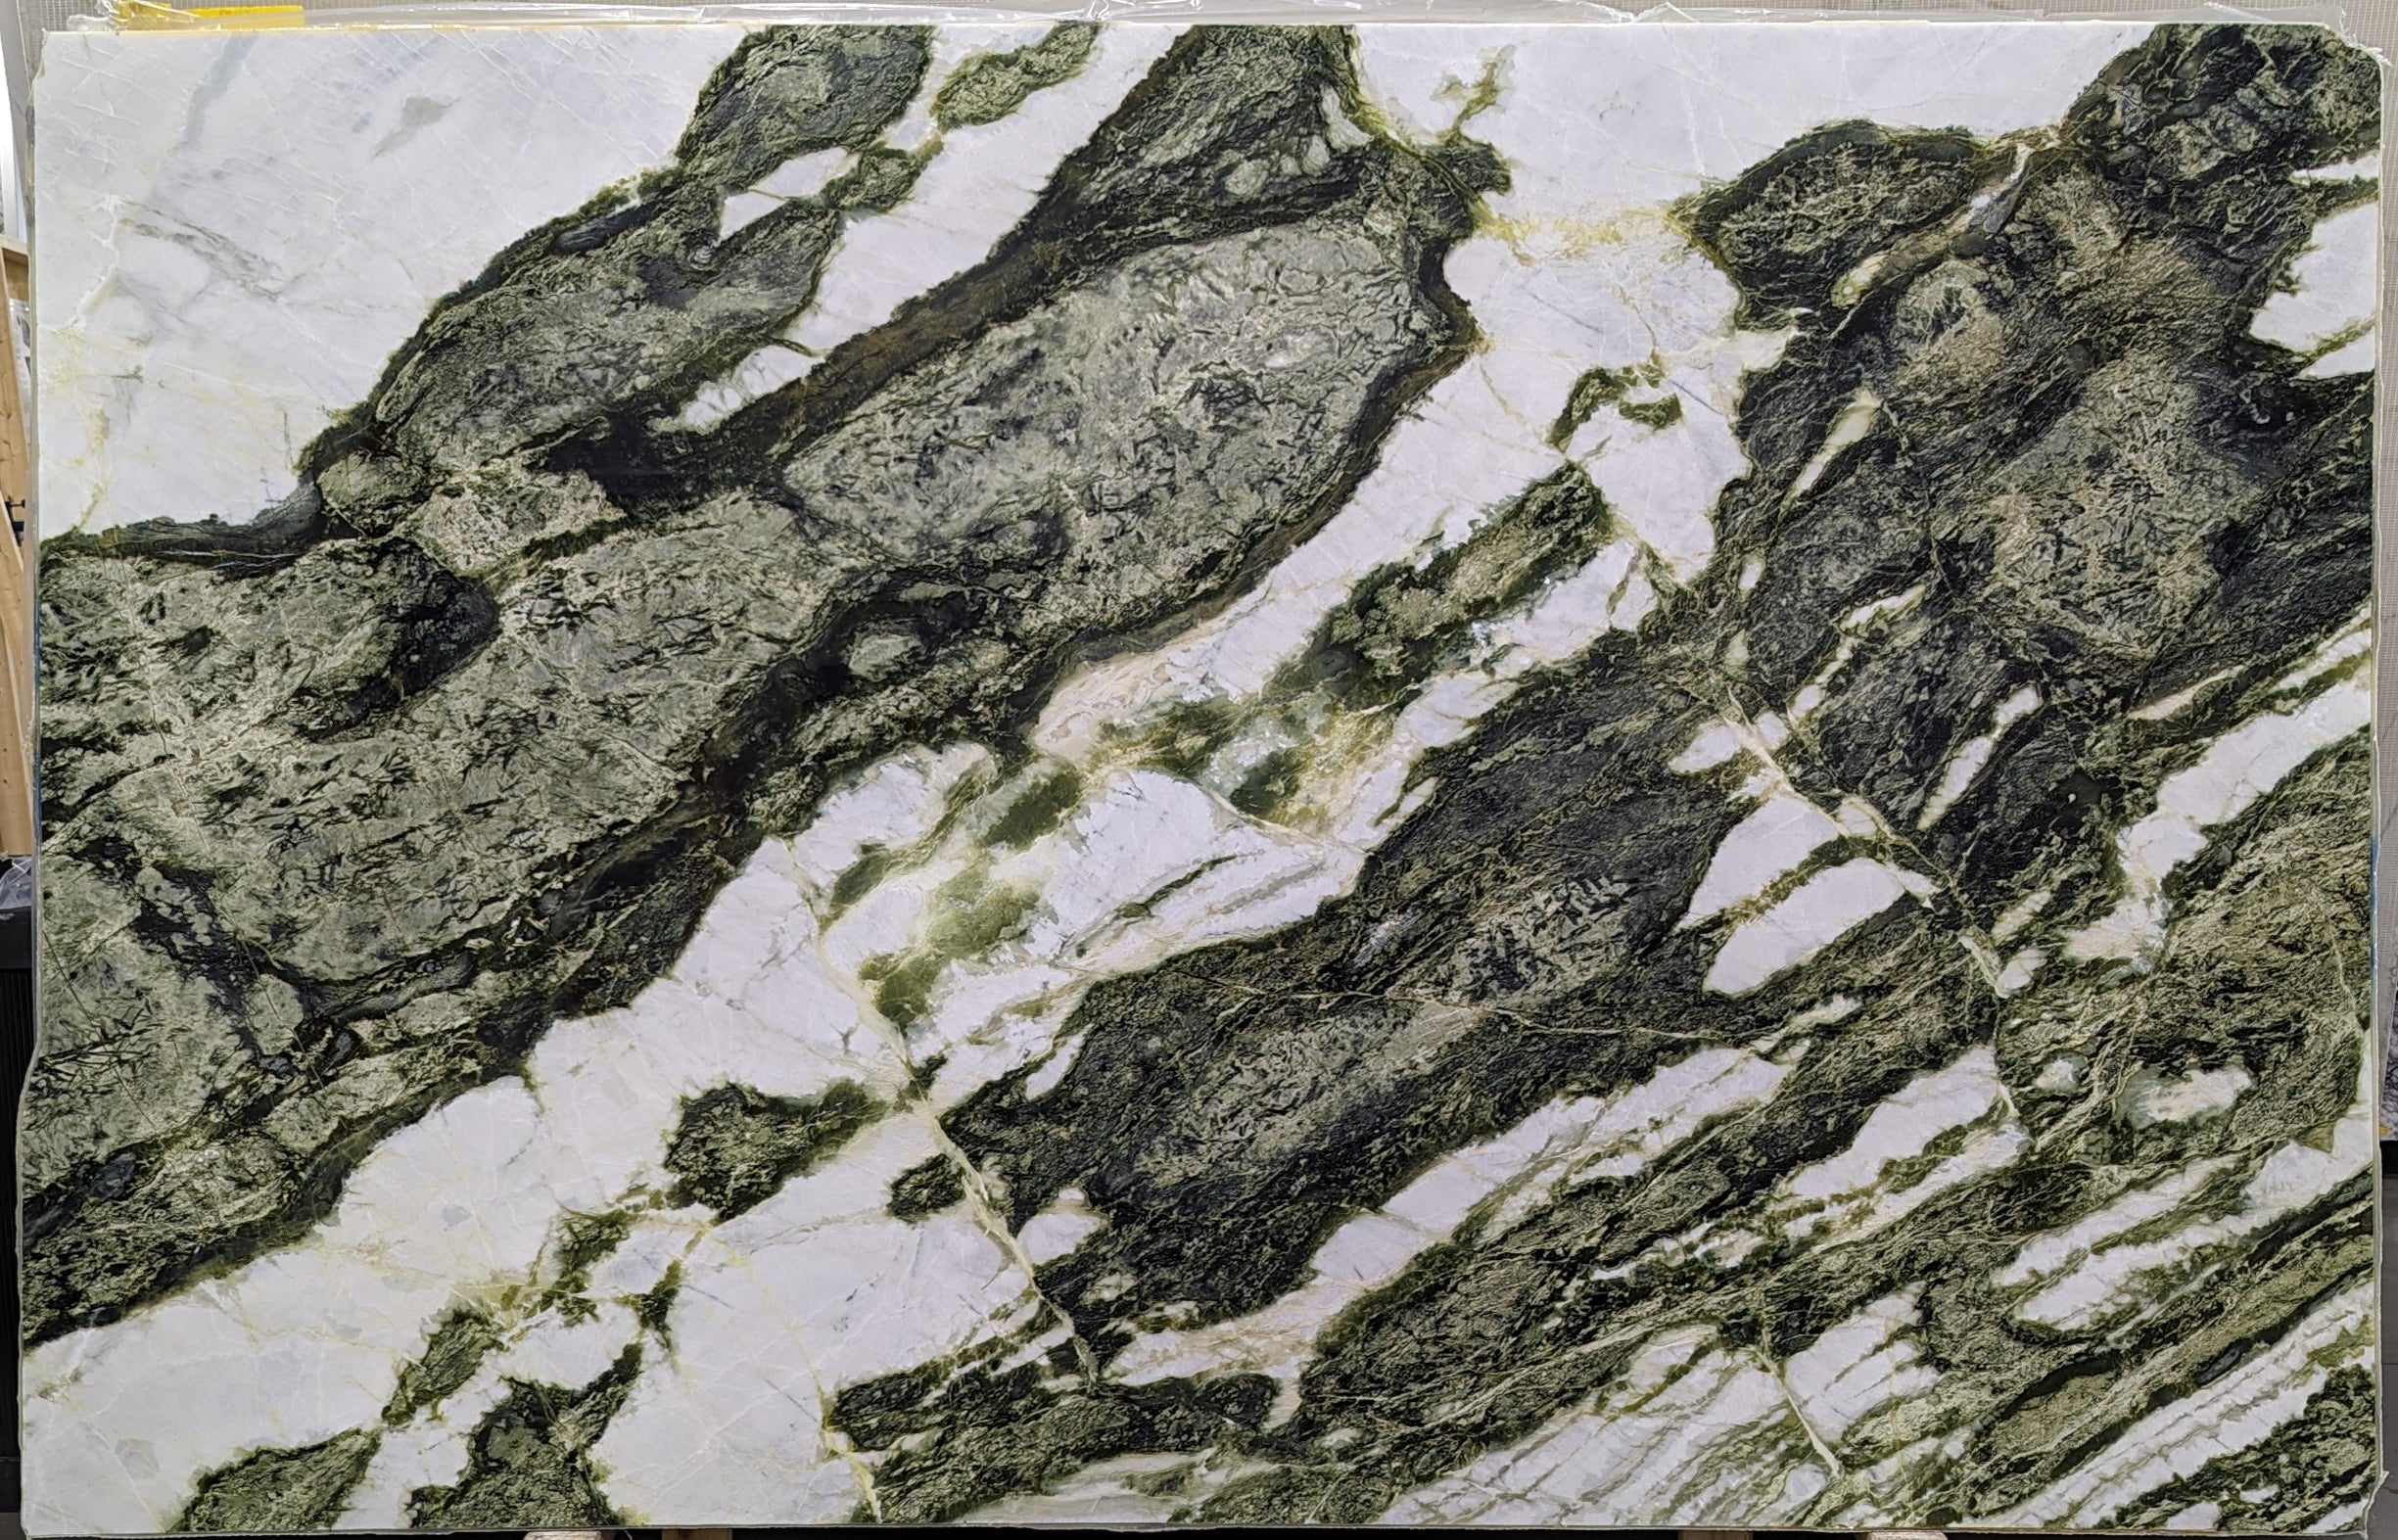  Calacatta Verde Marble Slab 3/4 - 711/B#13 -  69X106 